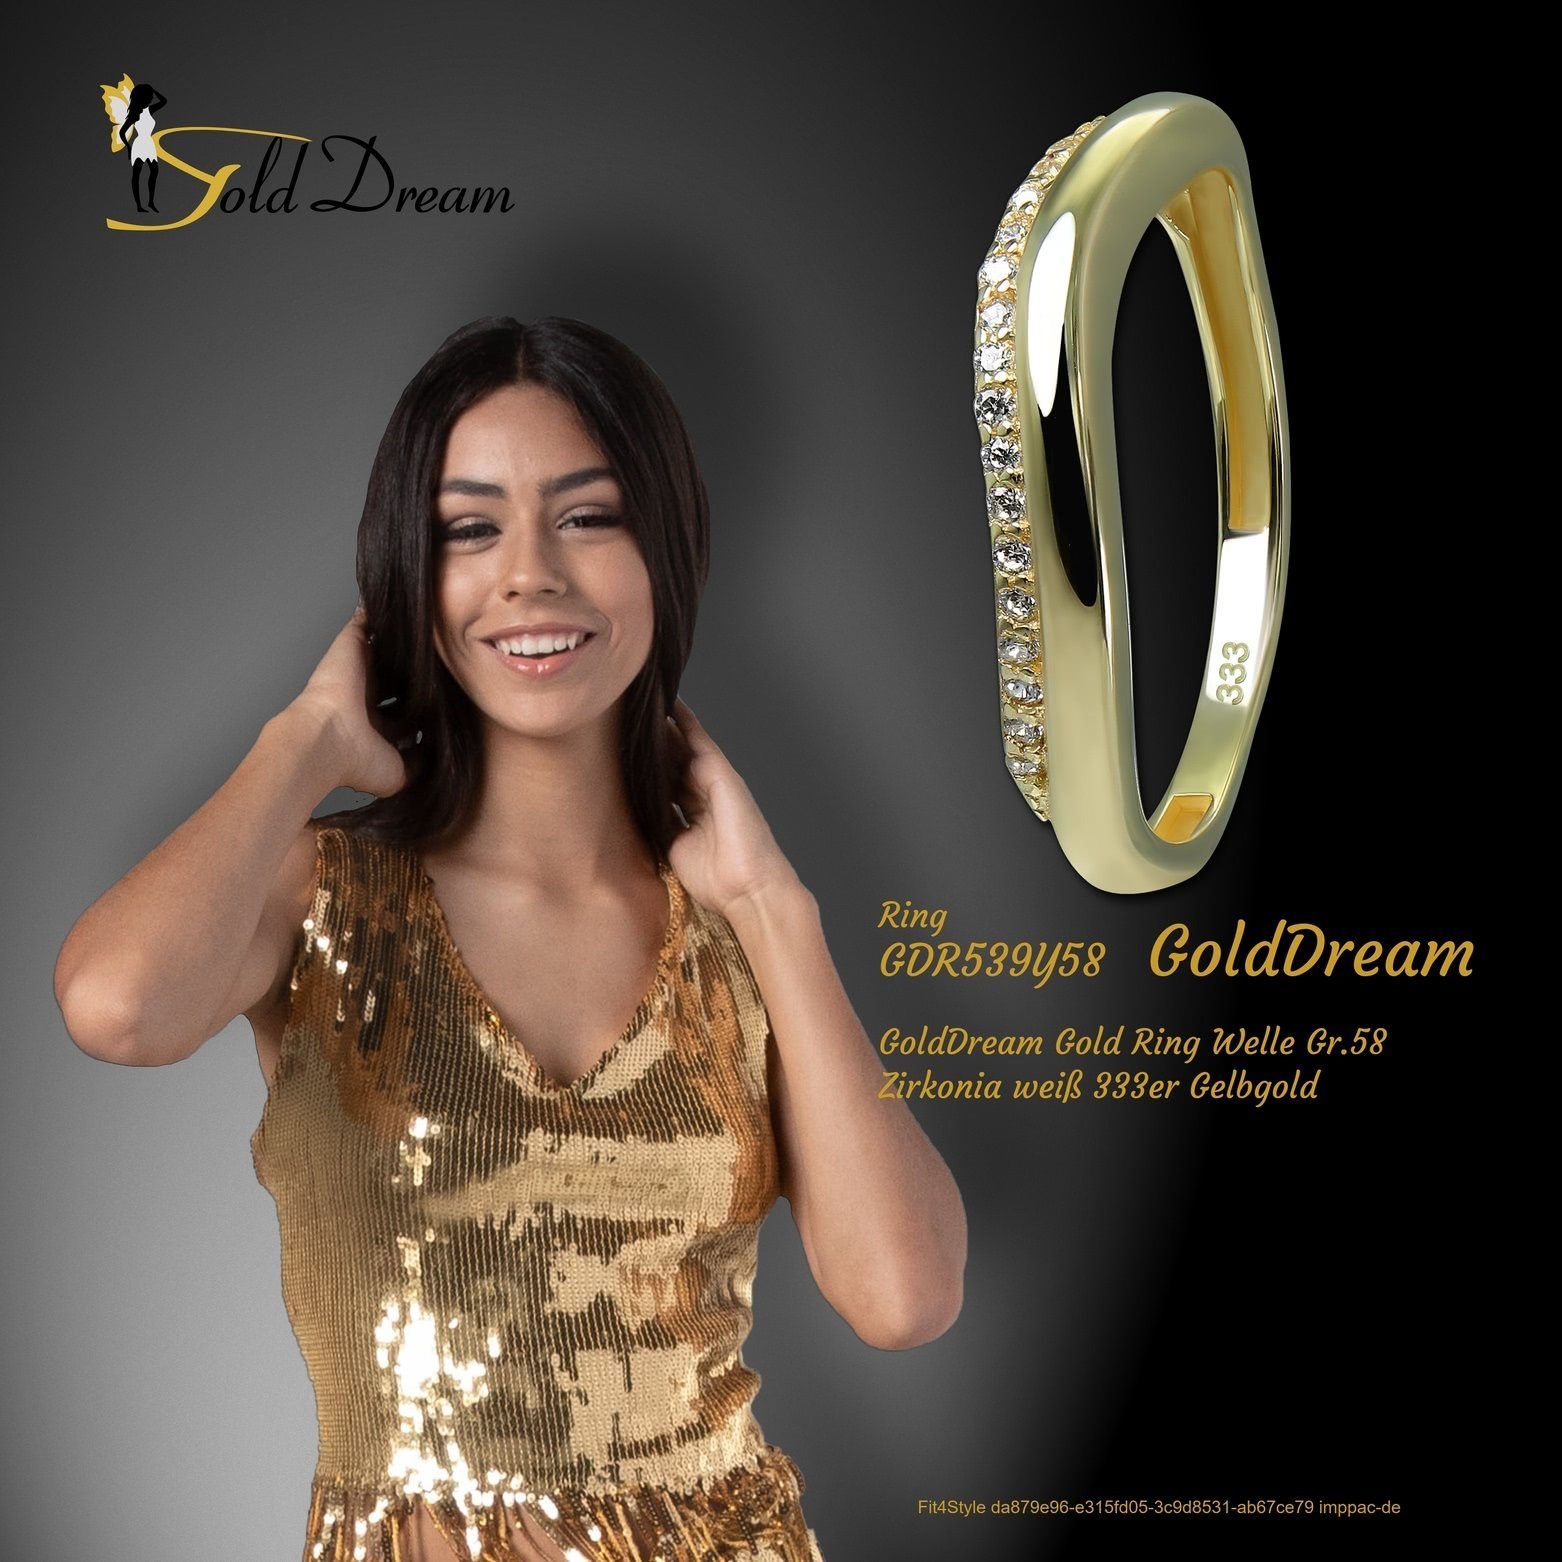 weiß Damen Welle 333 Karat, gold, Ring Zirkonia Gelbgold GoldDream Ring Goldring Farbe: Gr.58 GoldDream Gold (Fingerring), - Welle 8